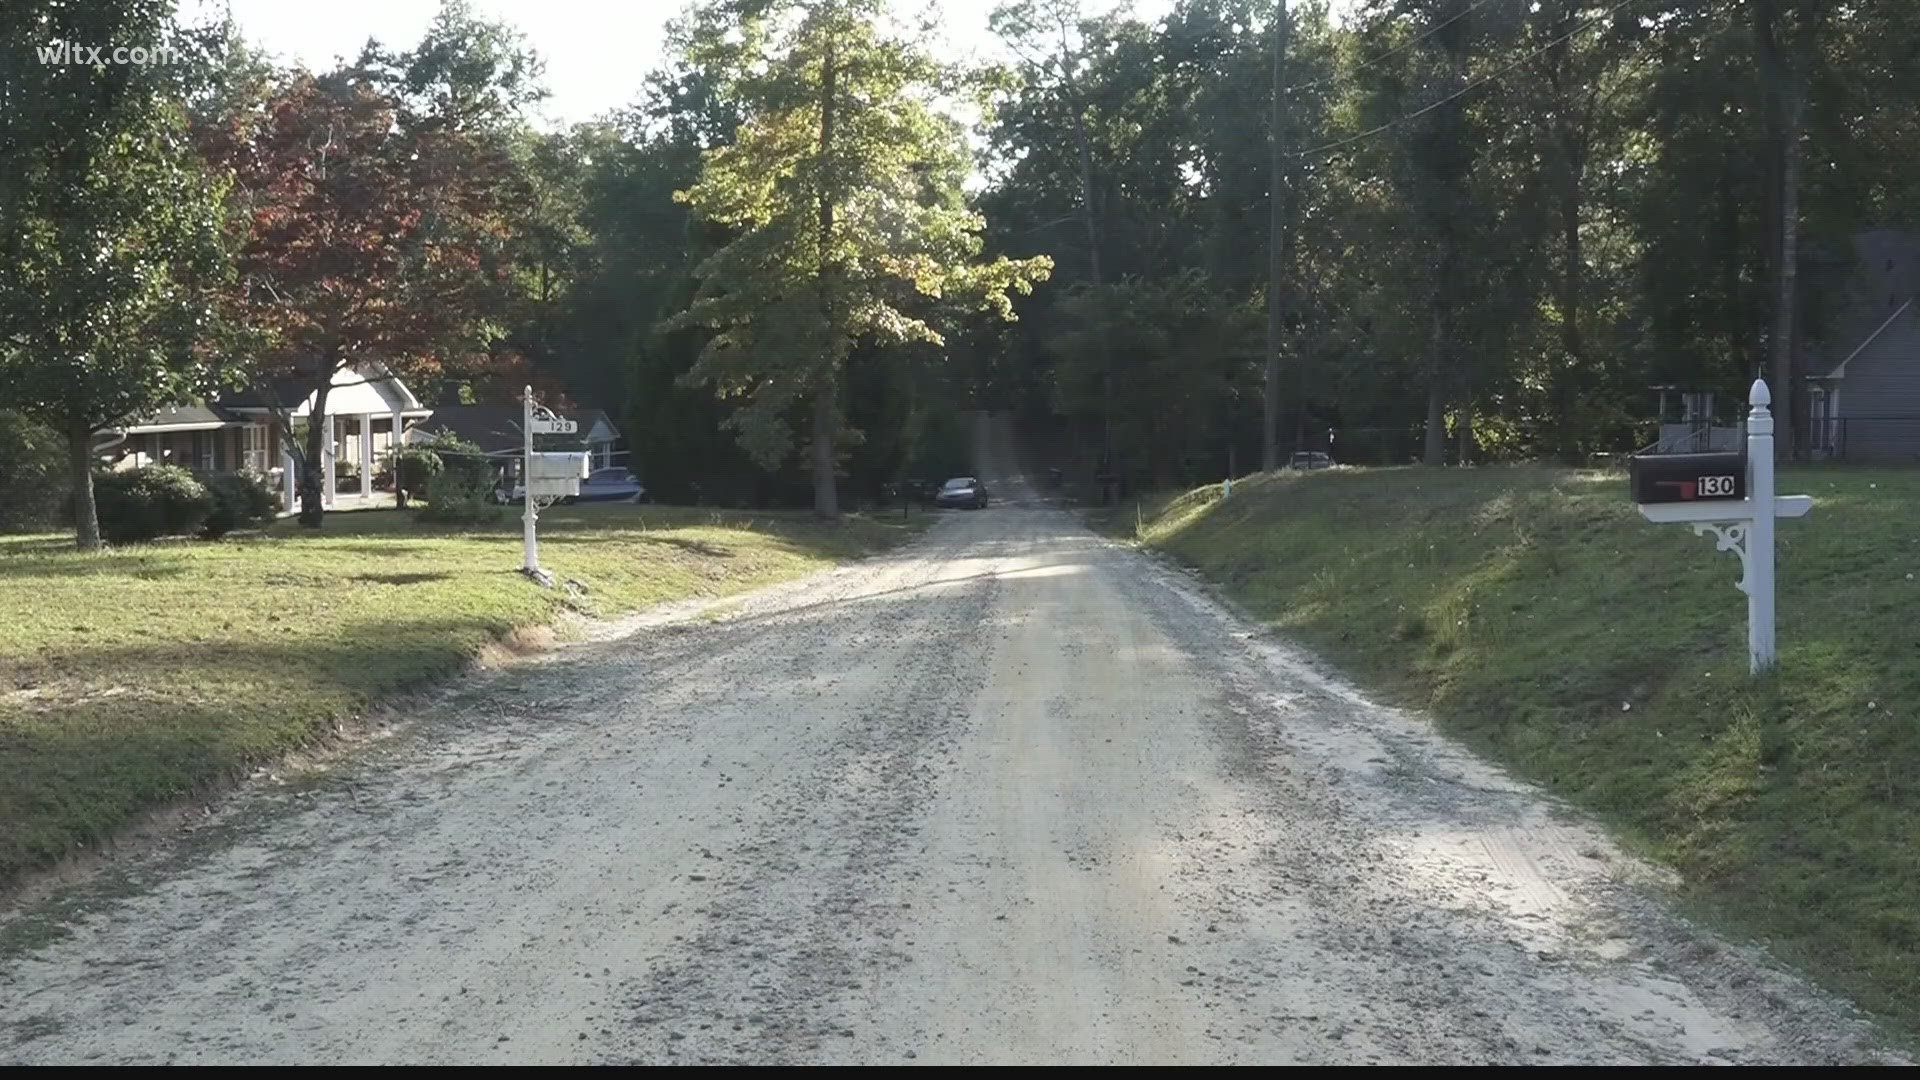 The Lexington Town council is taking steps toward paving dirt roads.